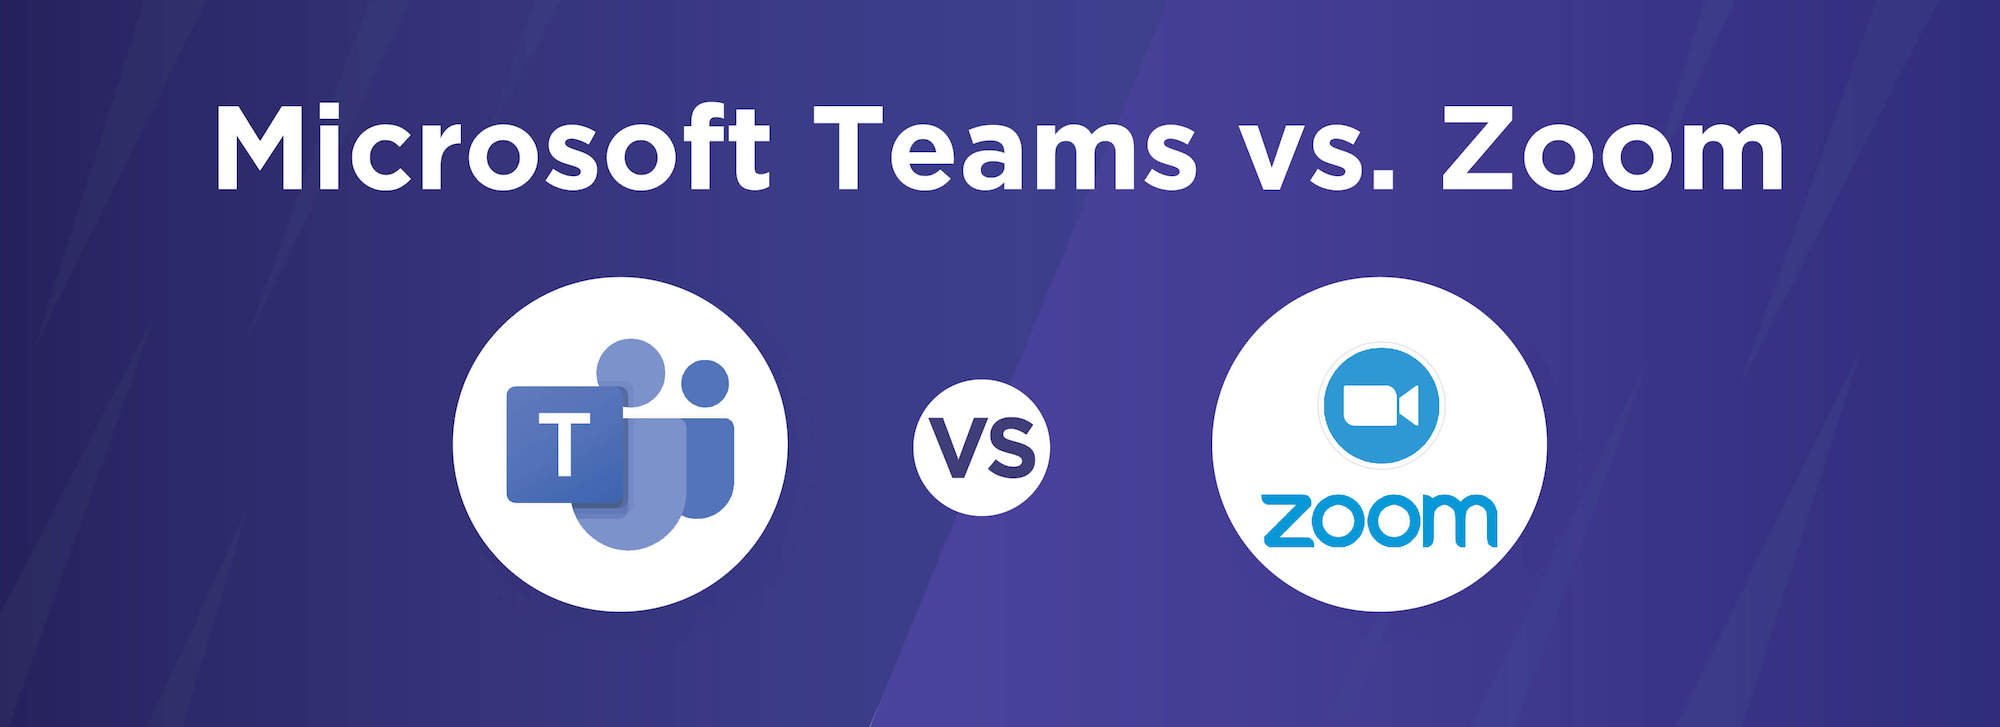 Microsoft Teams vs. Zoom: A Side-by-Side Comparison